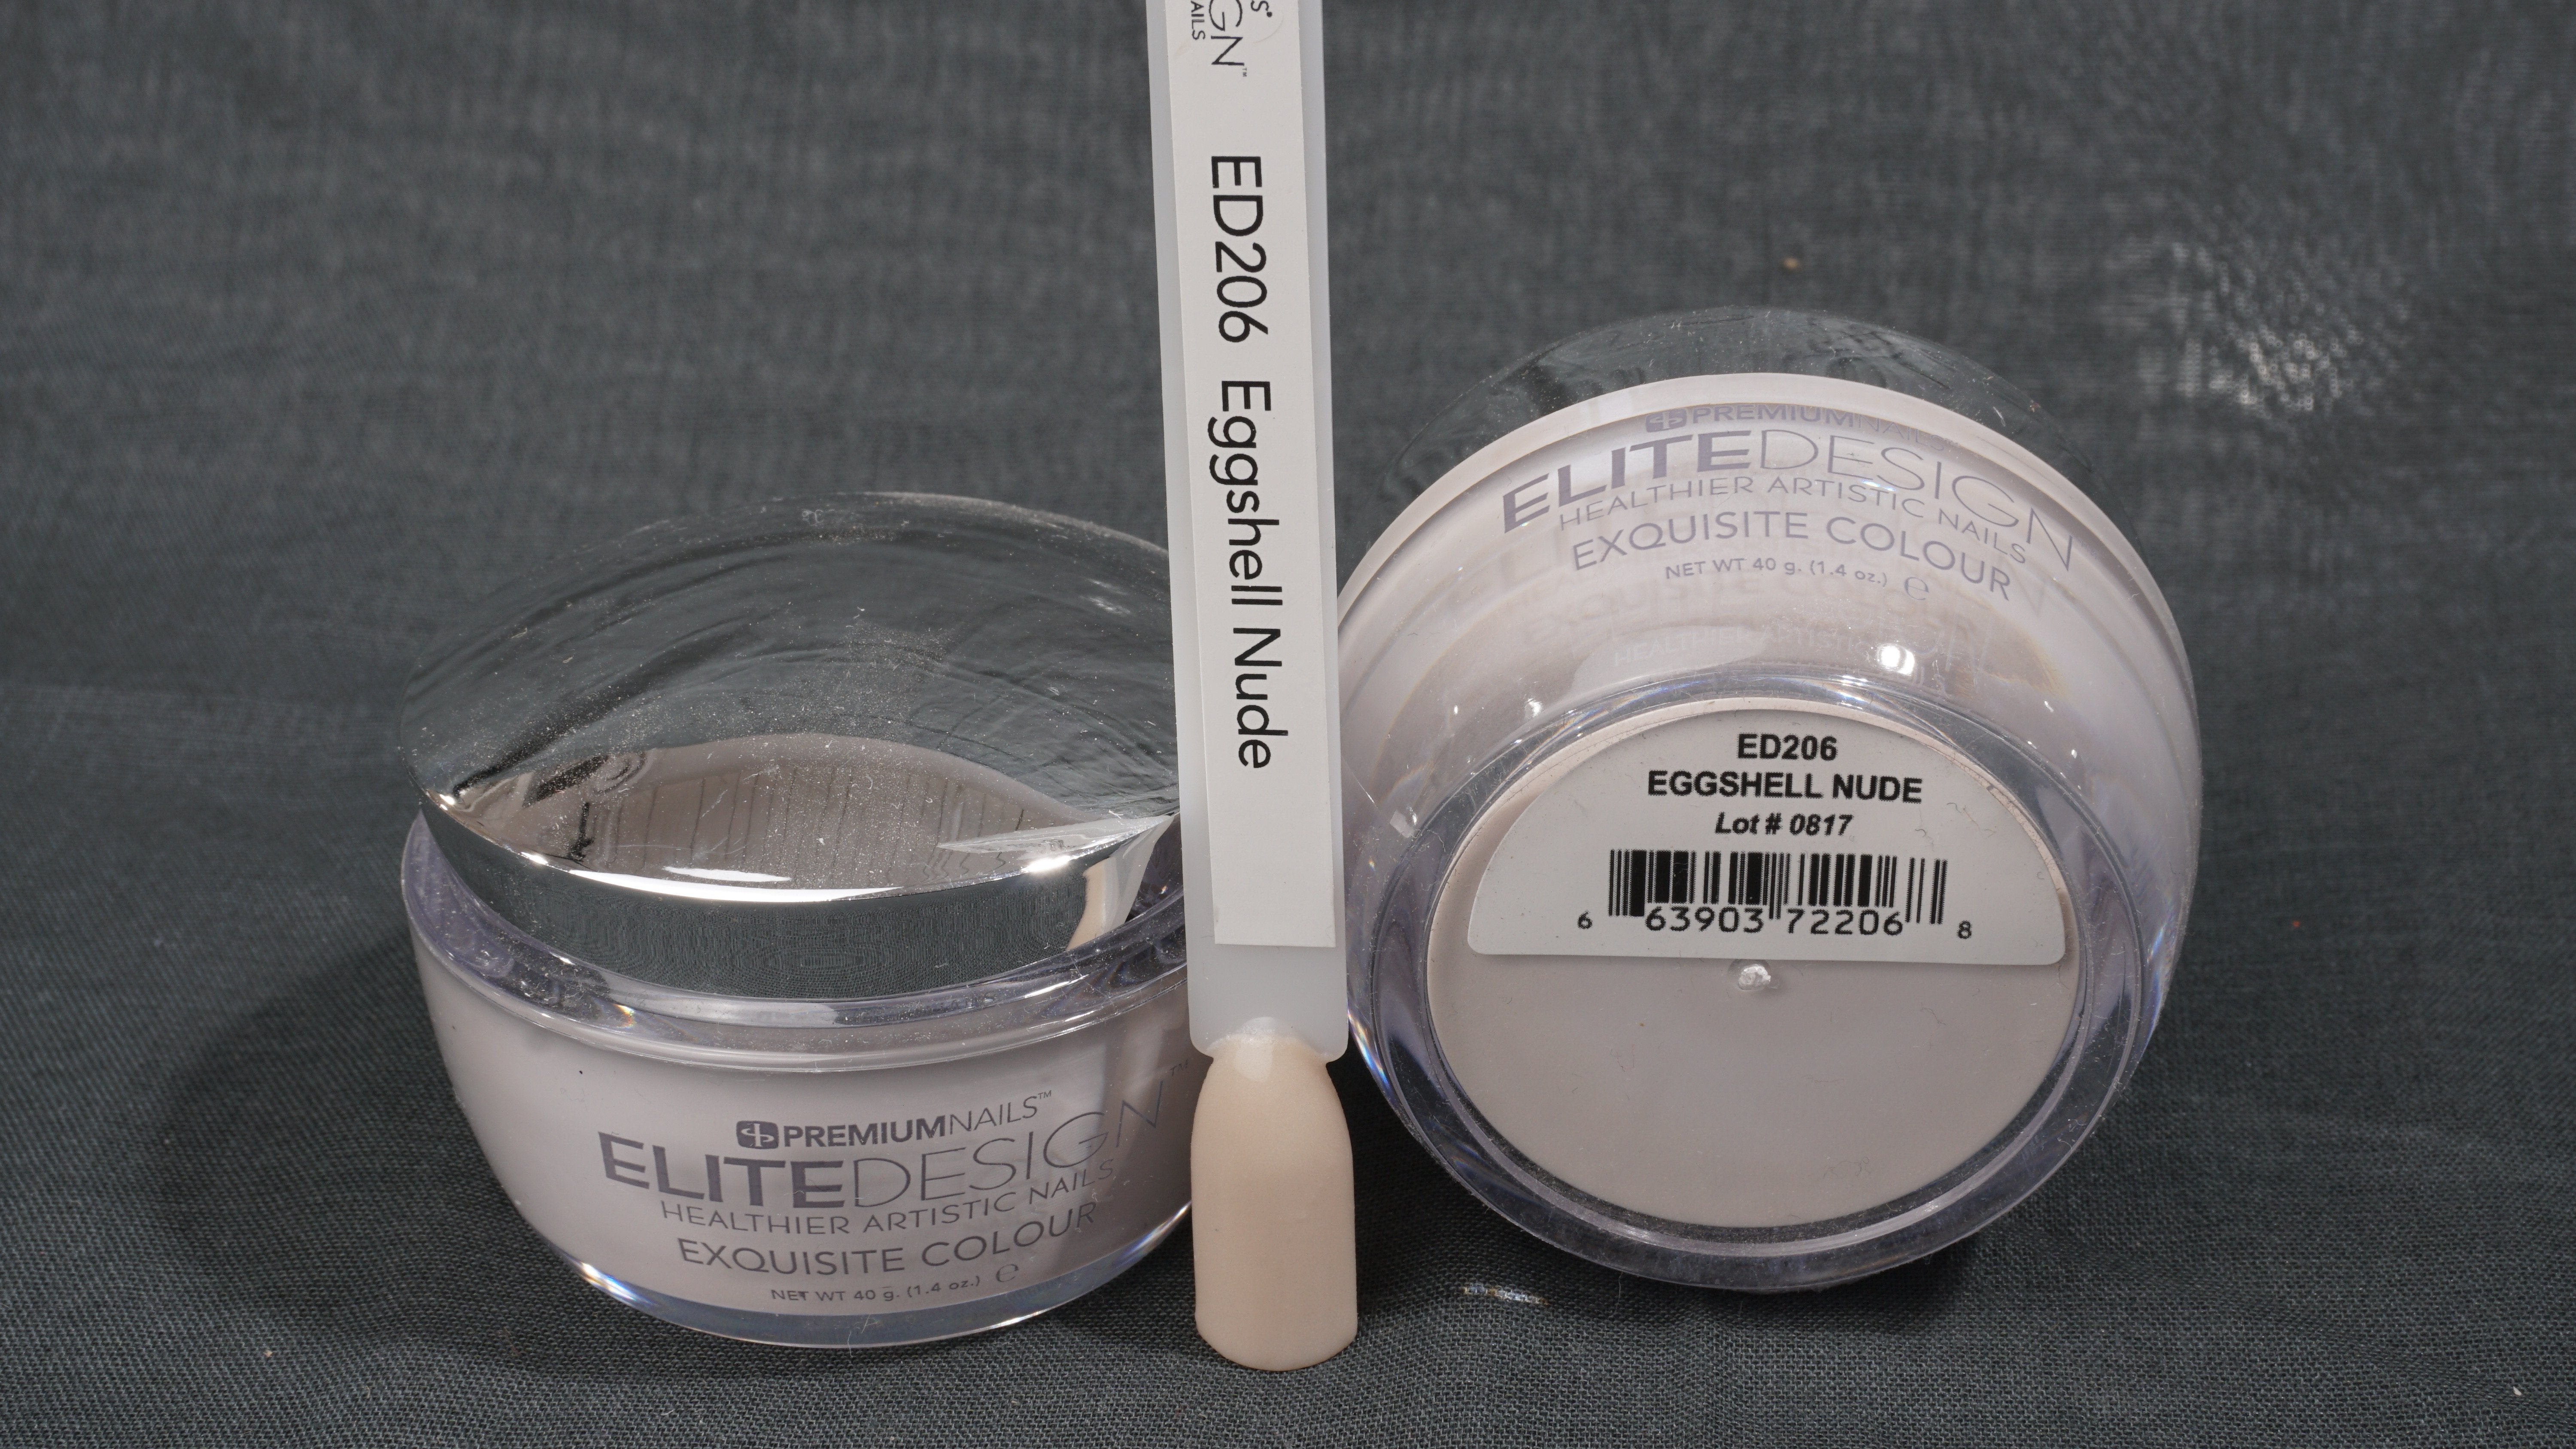 ED206 Eggshell Nude 40 g - ELITEDESIGN PREMIUM NAILS Dip Powder